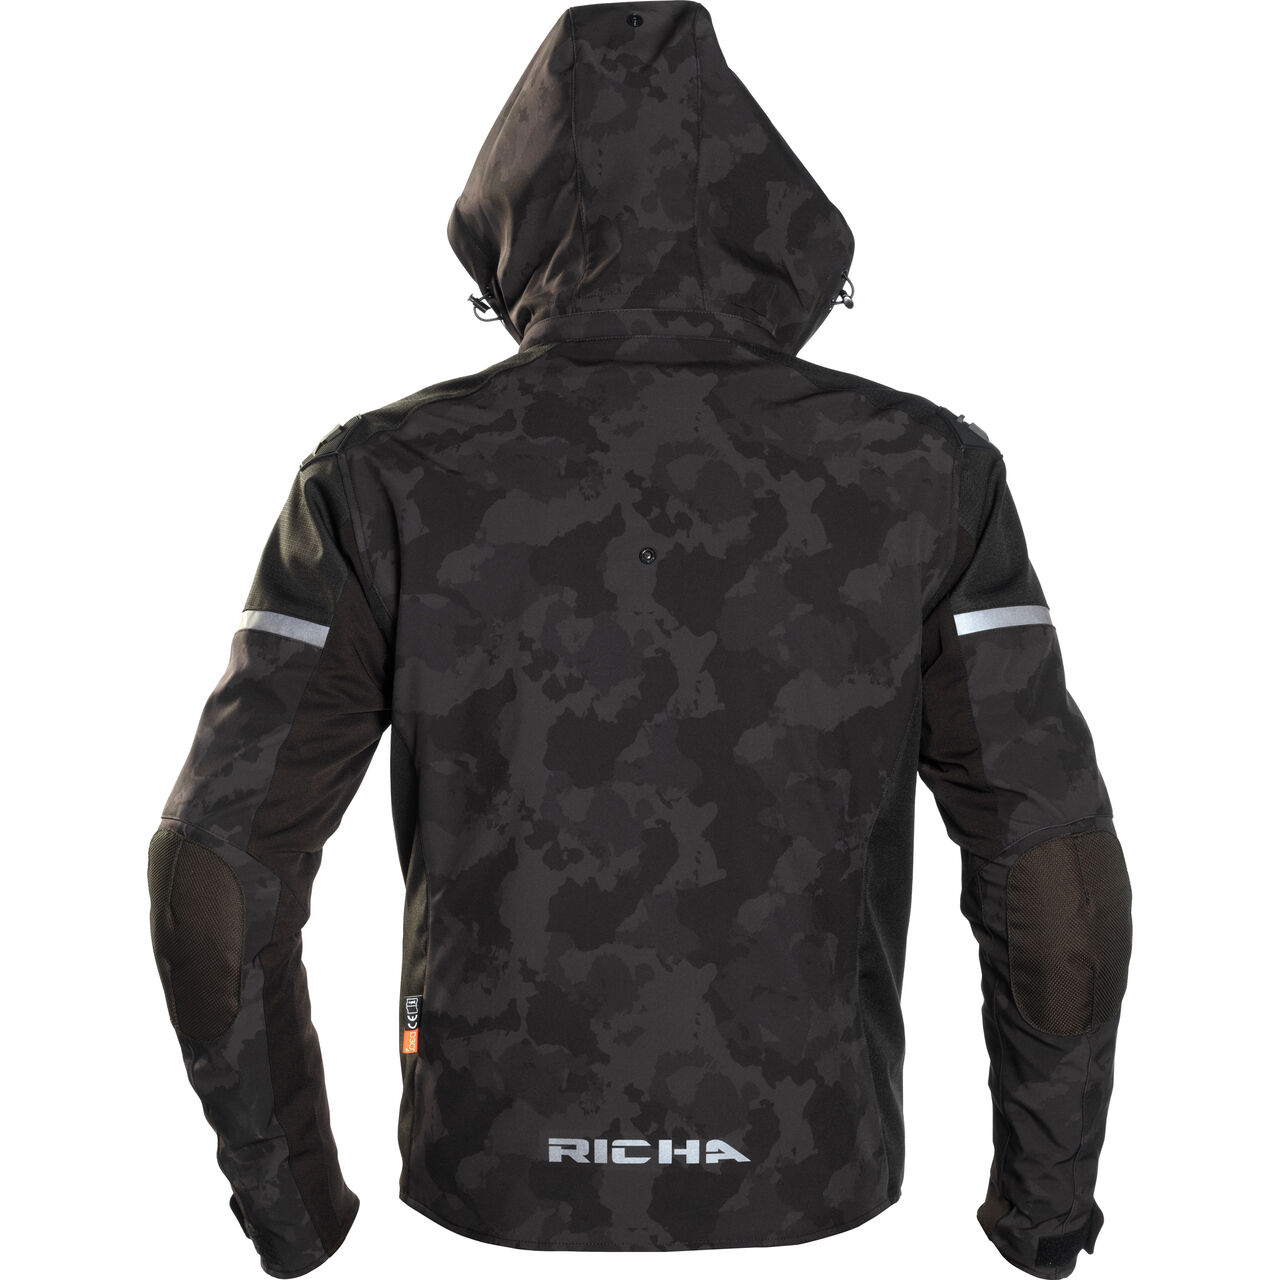 Stealth Textile Jacket black/camo 5XL